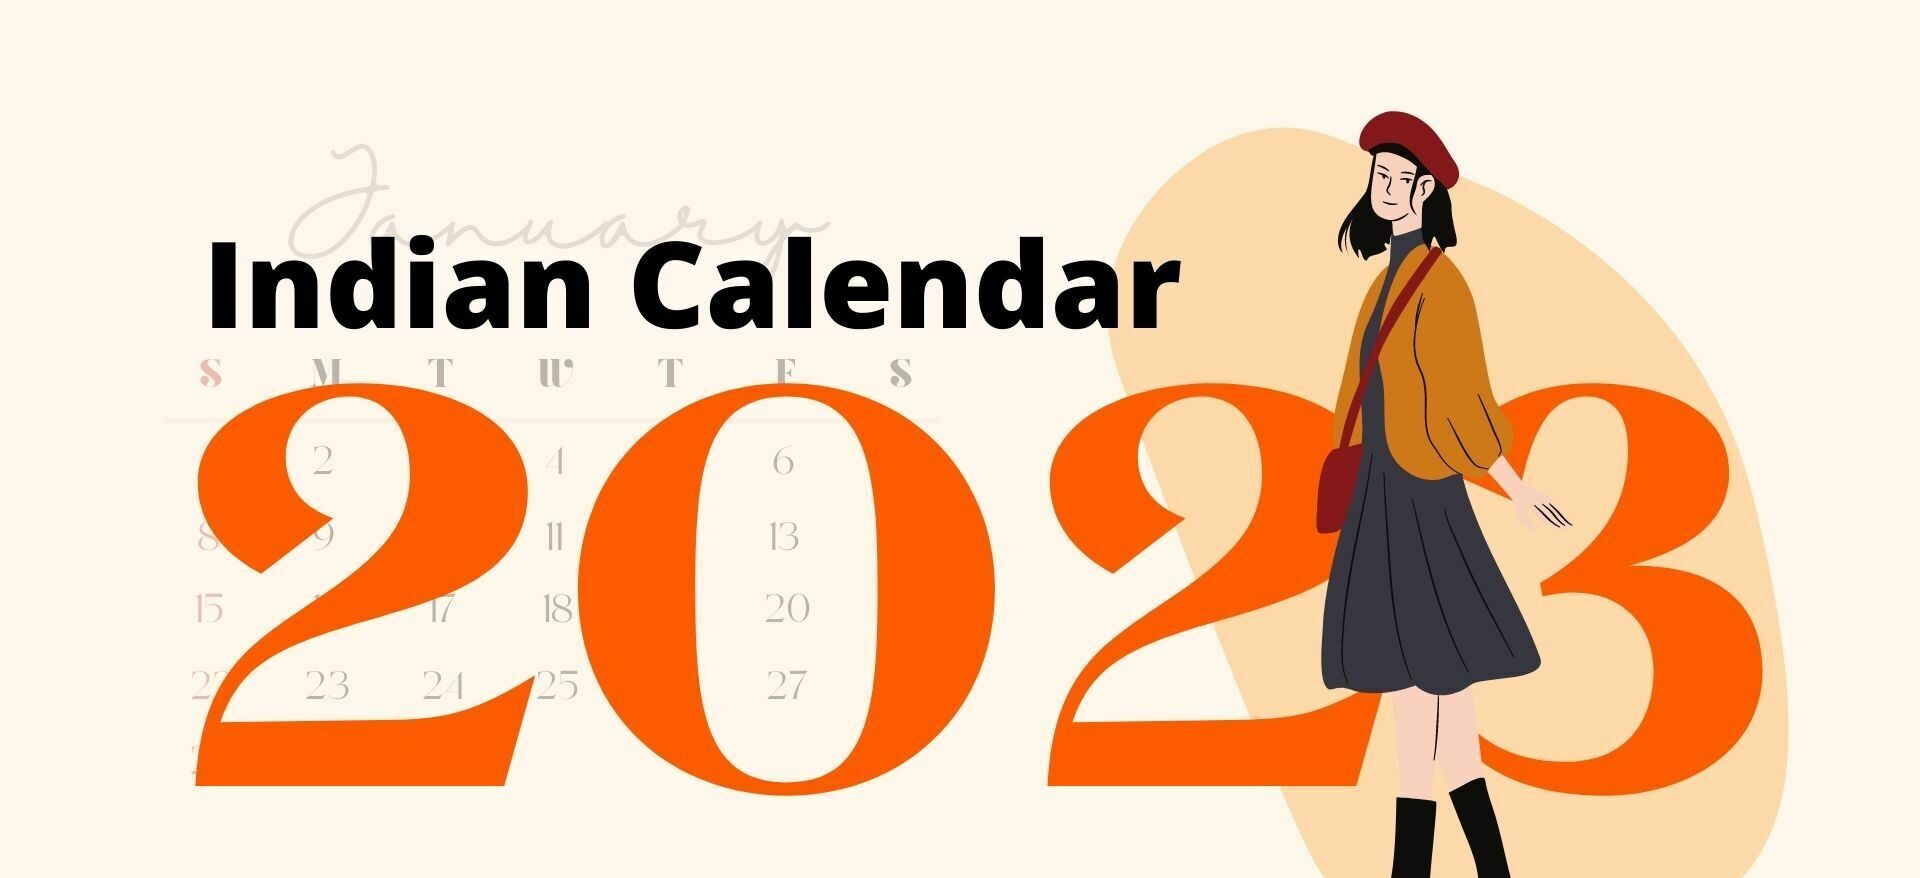 Indian Calendar 2023 - Indian Festivals and Holidays